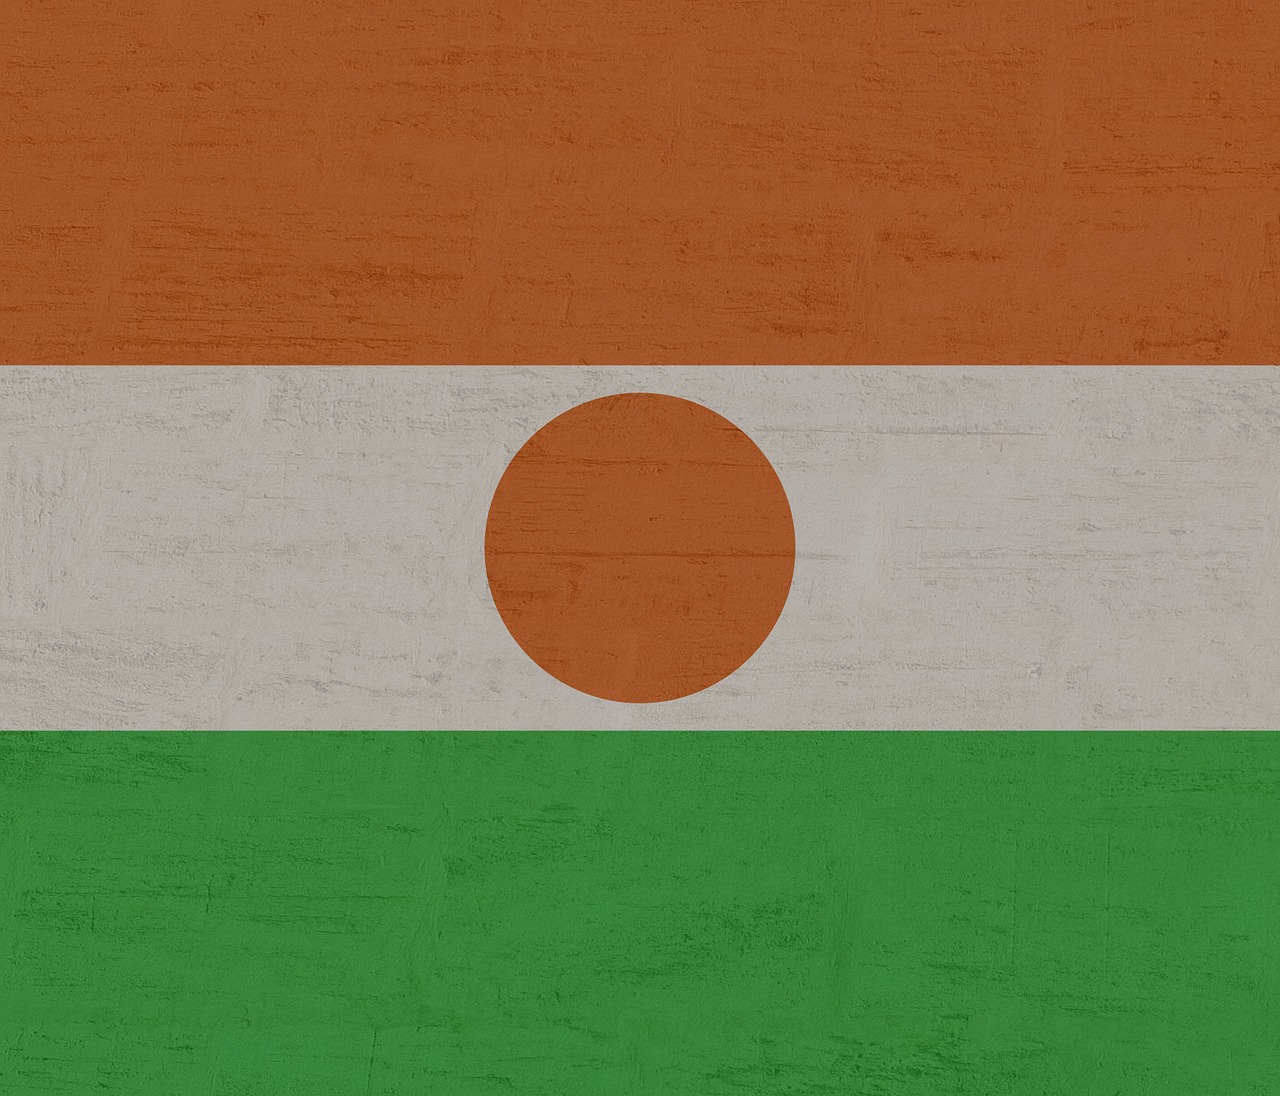 niger flag international free photo